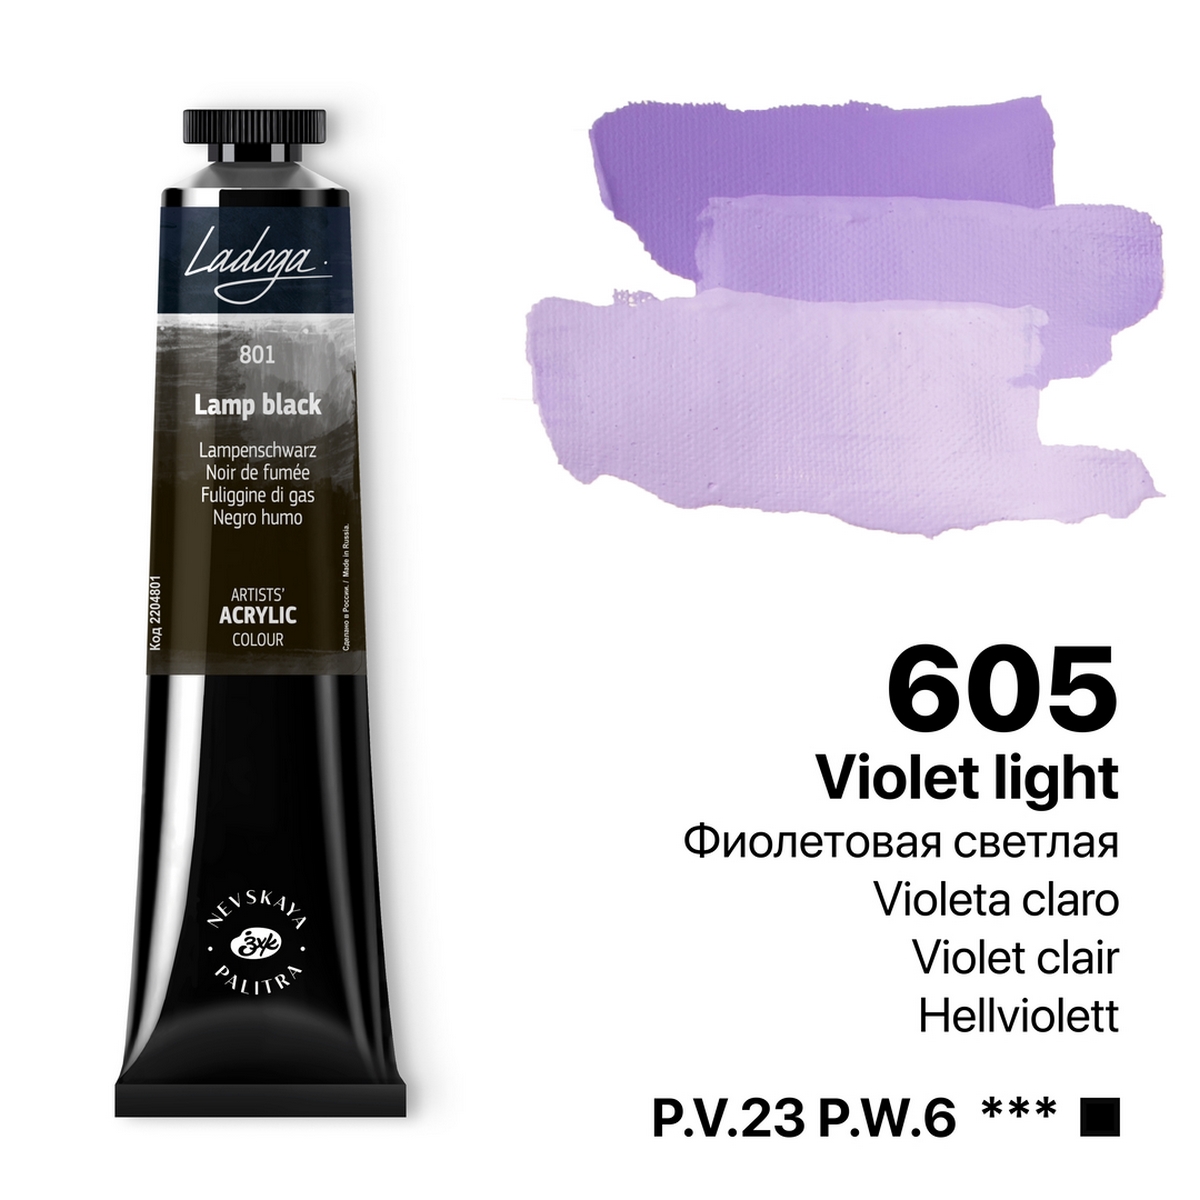 Acrylic colour Ladoga, Violet light, № 605